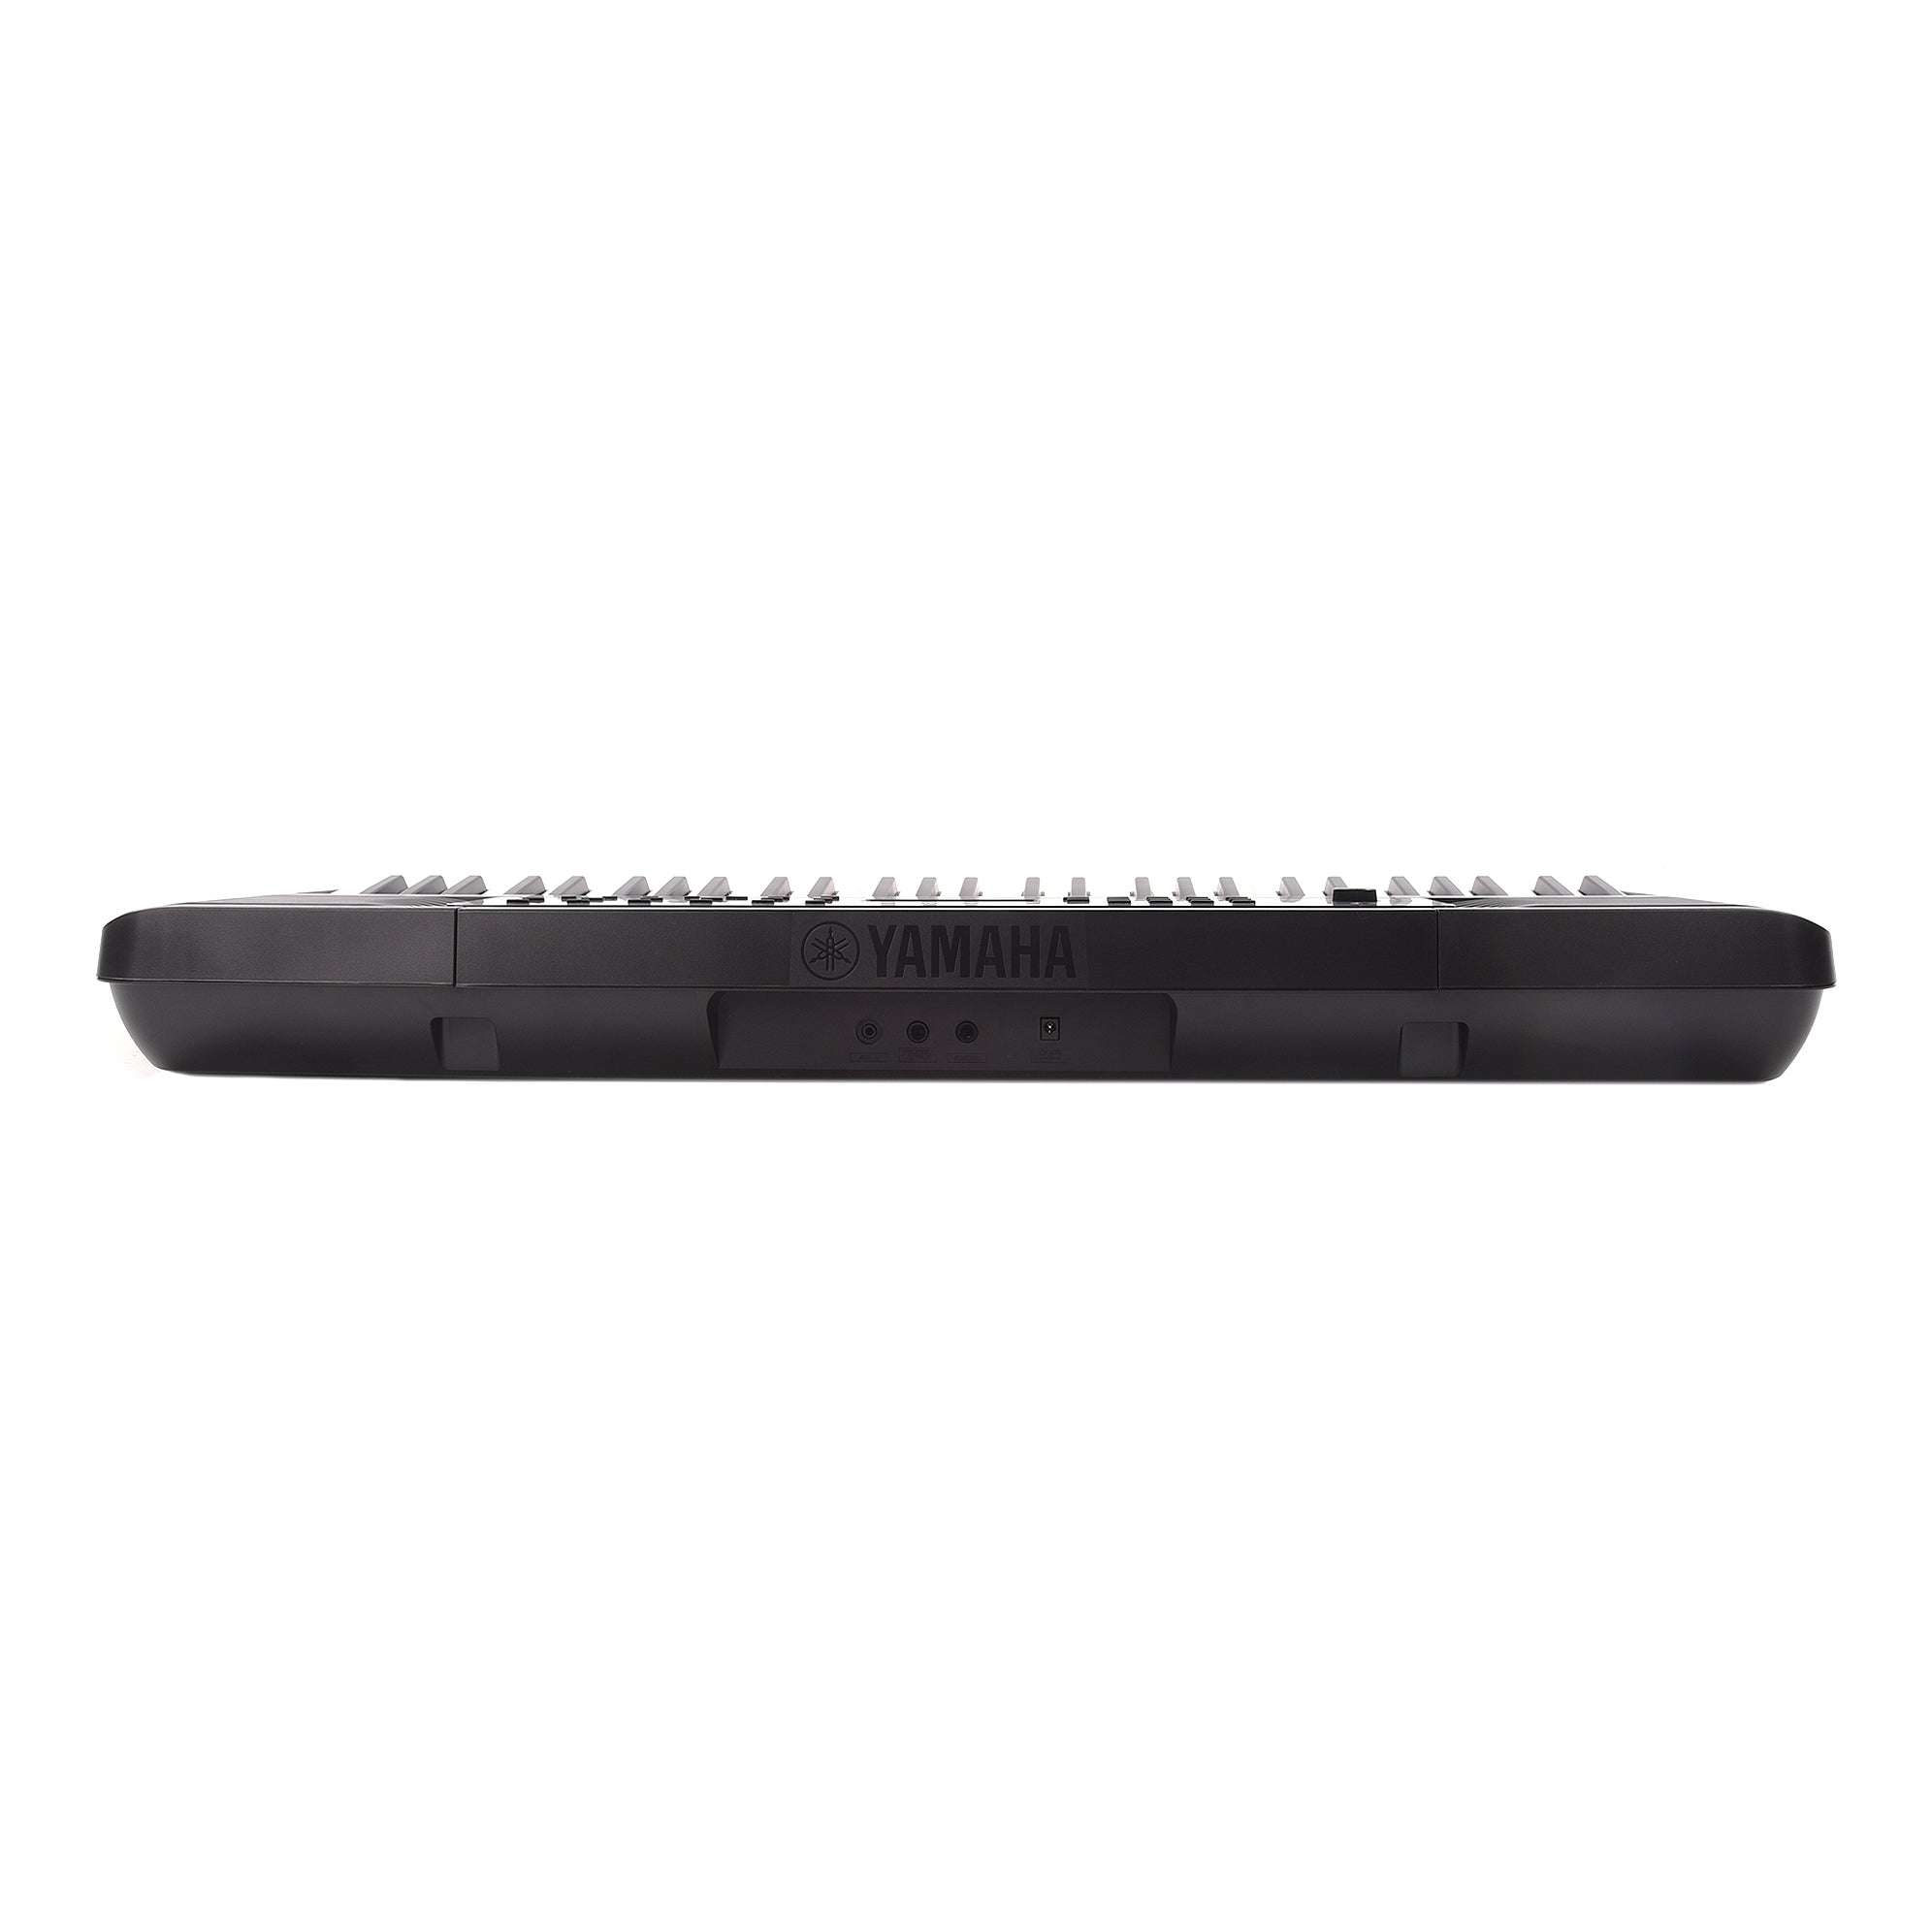 Yamaha PSRE283 61-Key Portable Keyboard